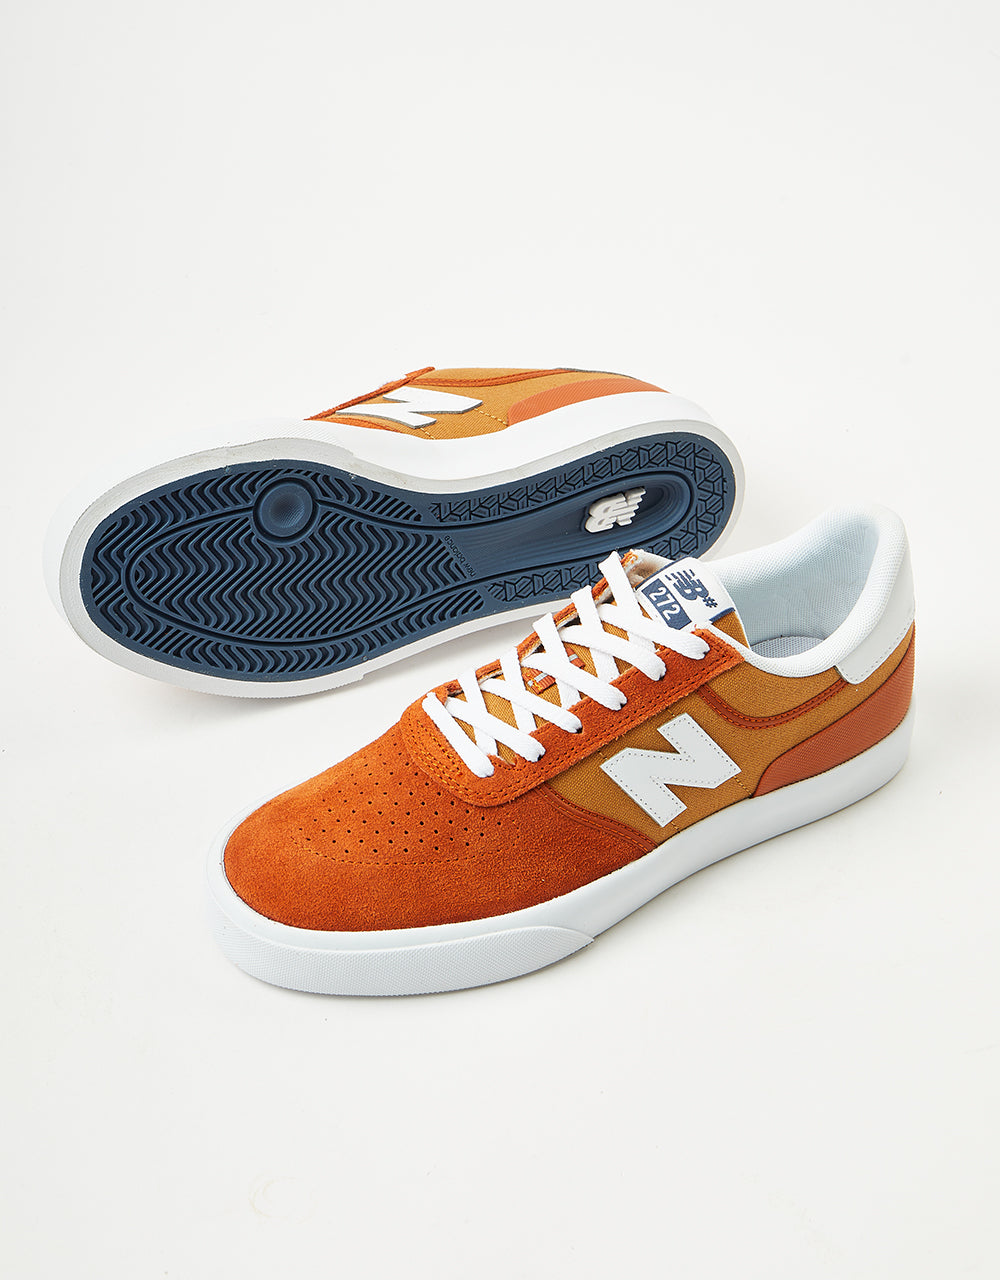 New Balance Numeric 272 Skate Shoes - Rust/White